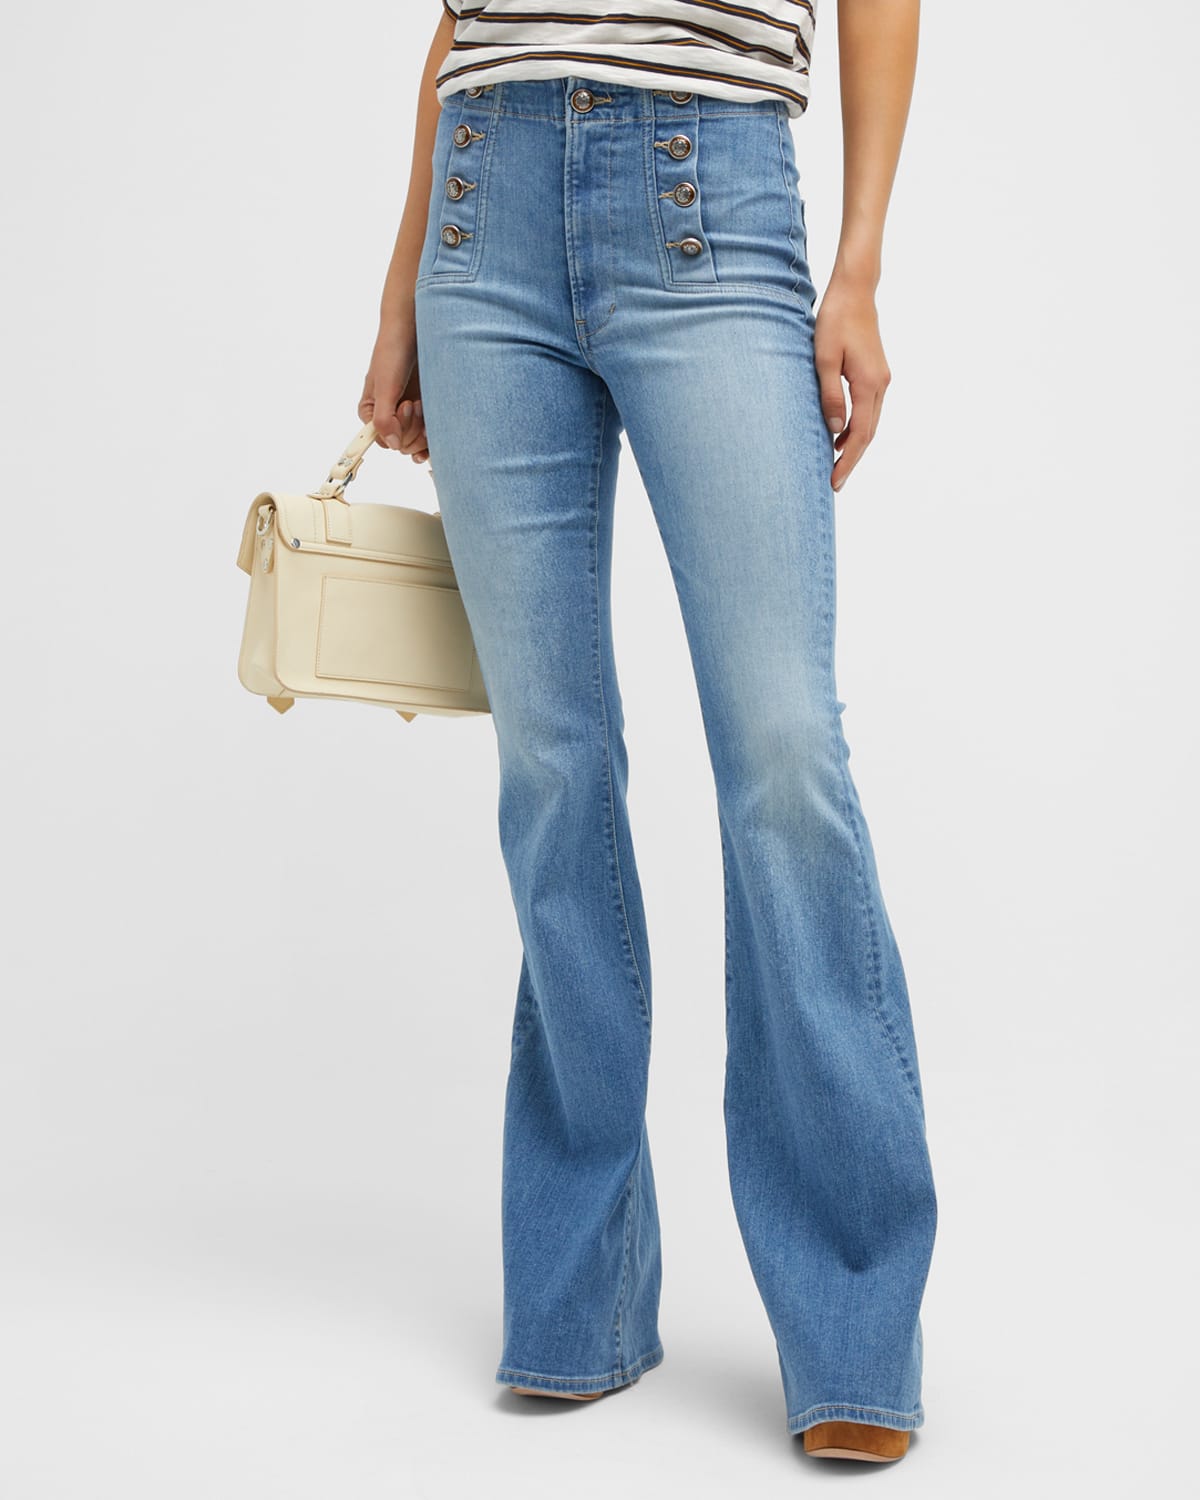 Veronica Beard Jeans Sheridan Bell Bottom Jeans | Neiman Marcus